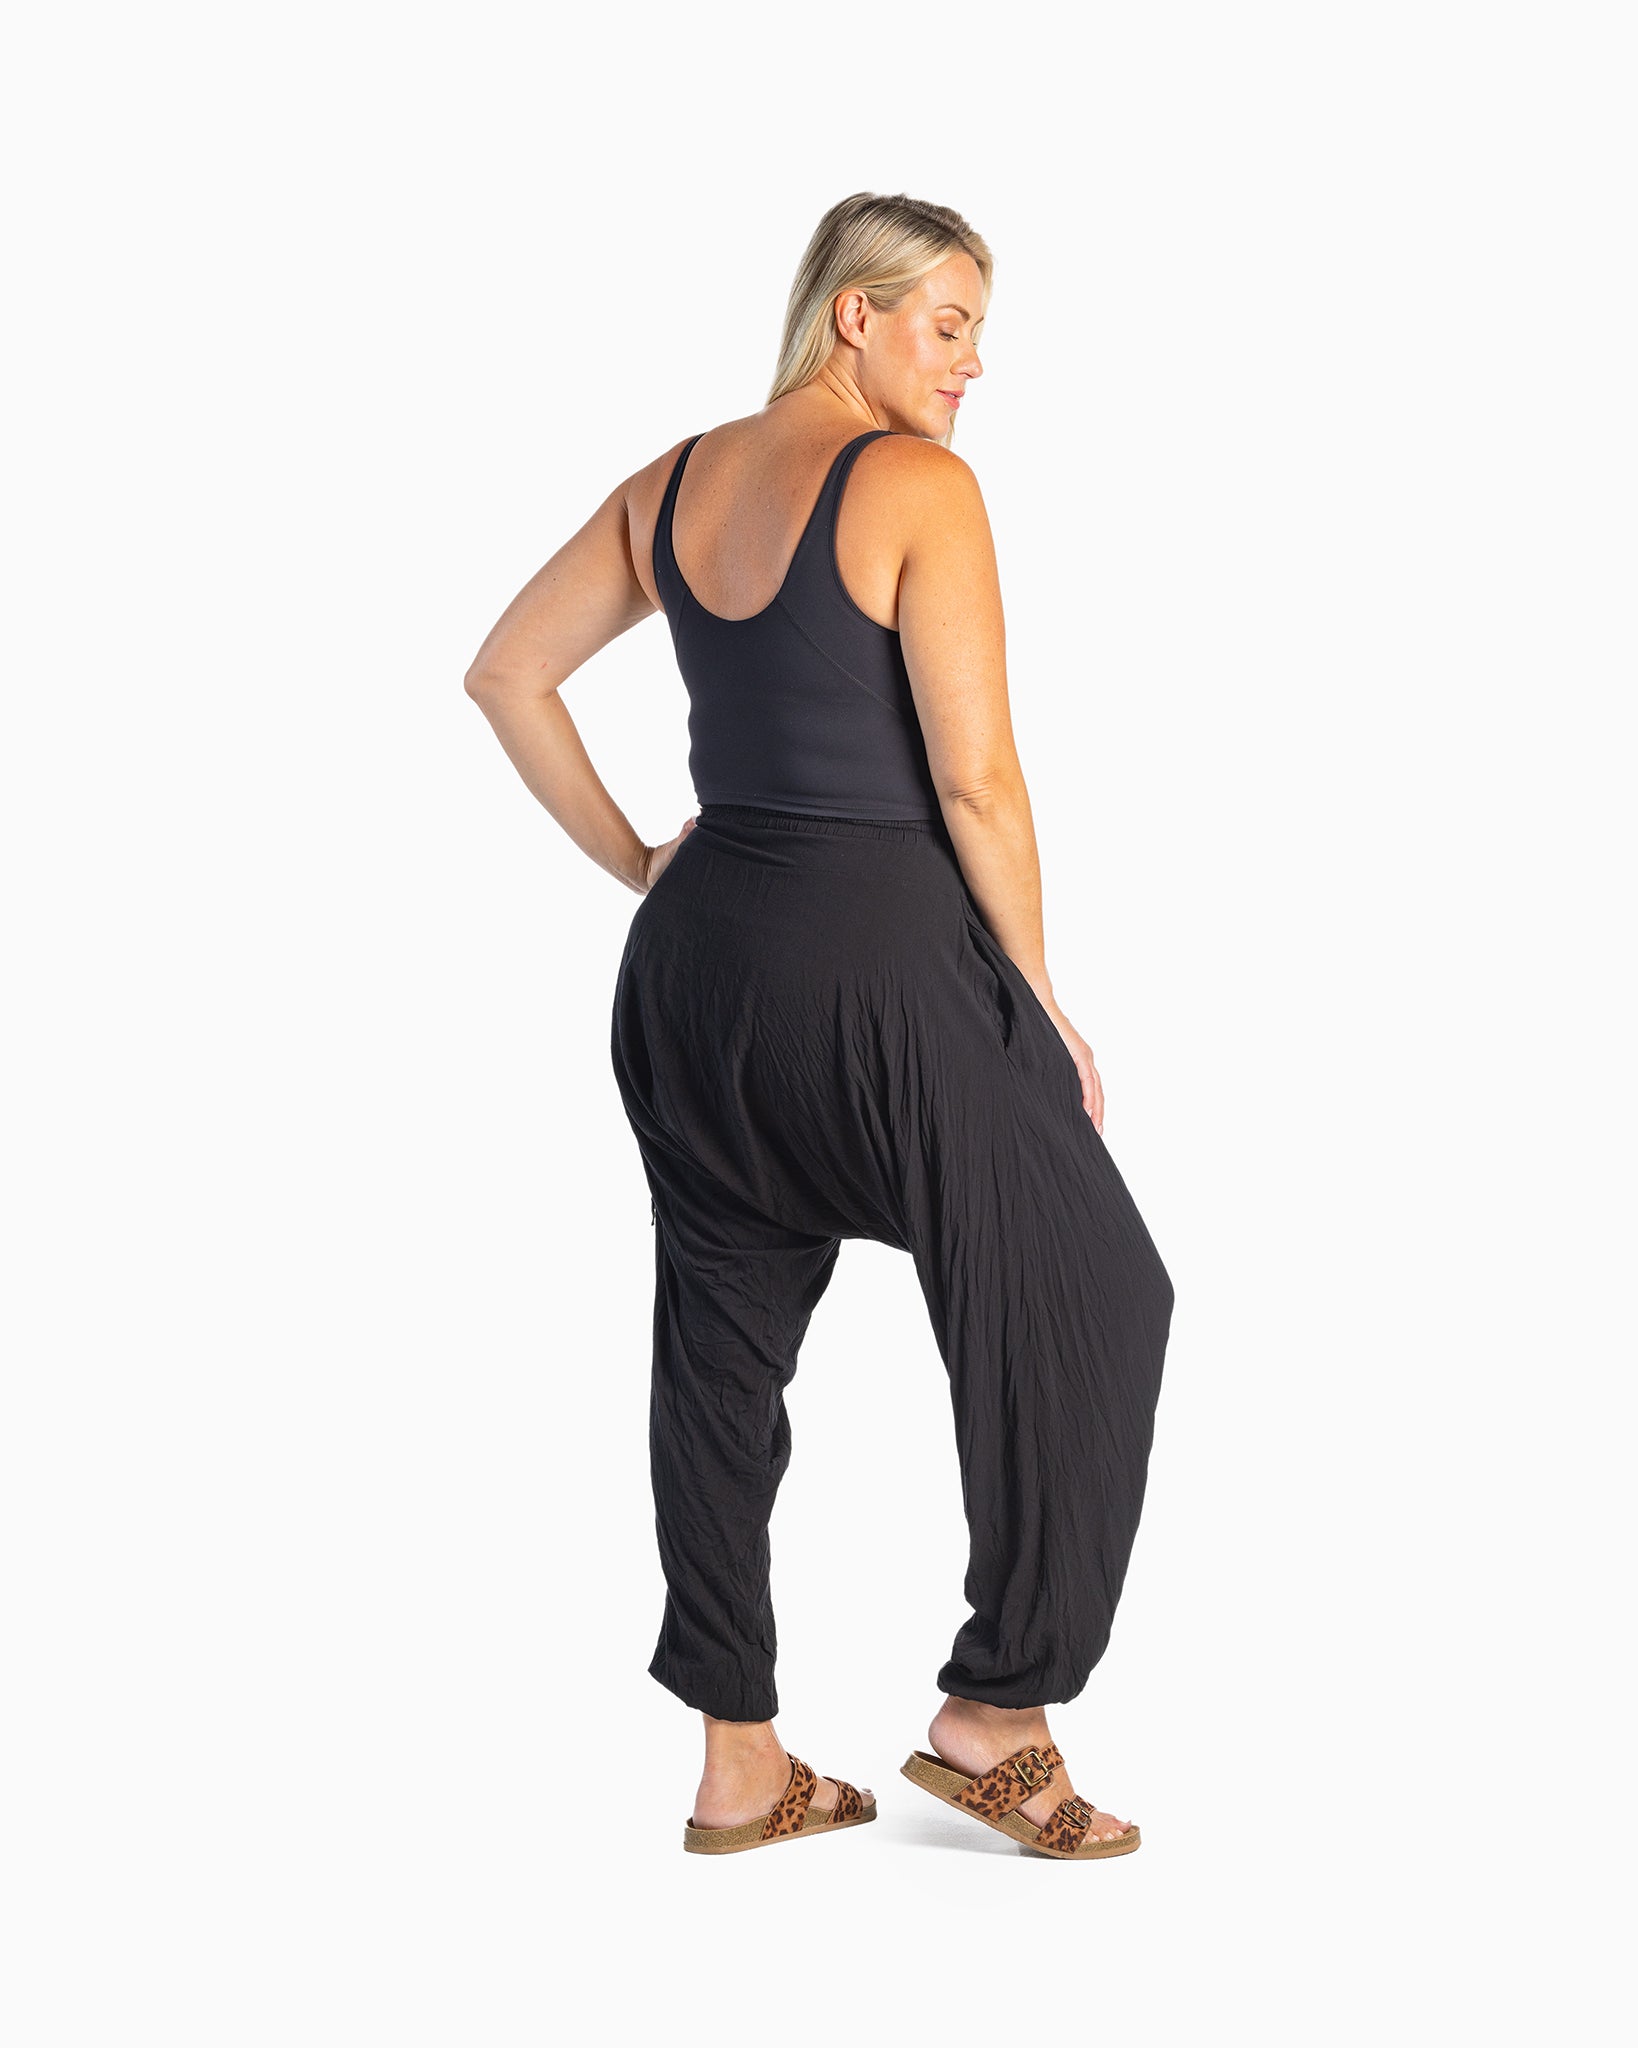 Buy Black Boho Pants for Women Flowy Yoga Pants Small to Plus